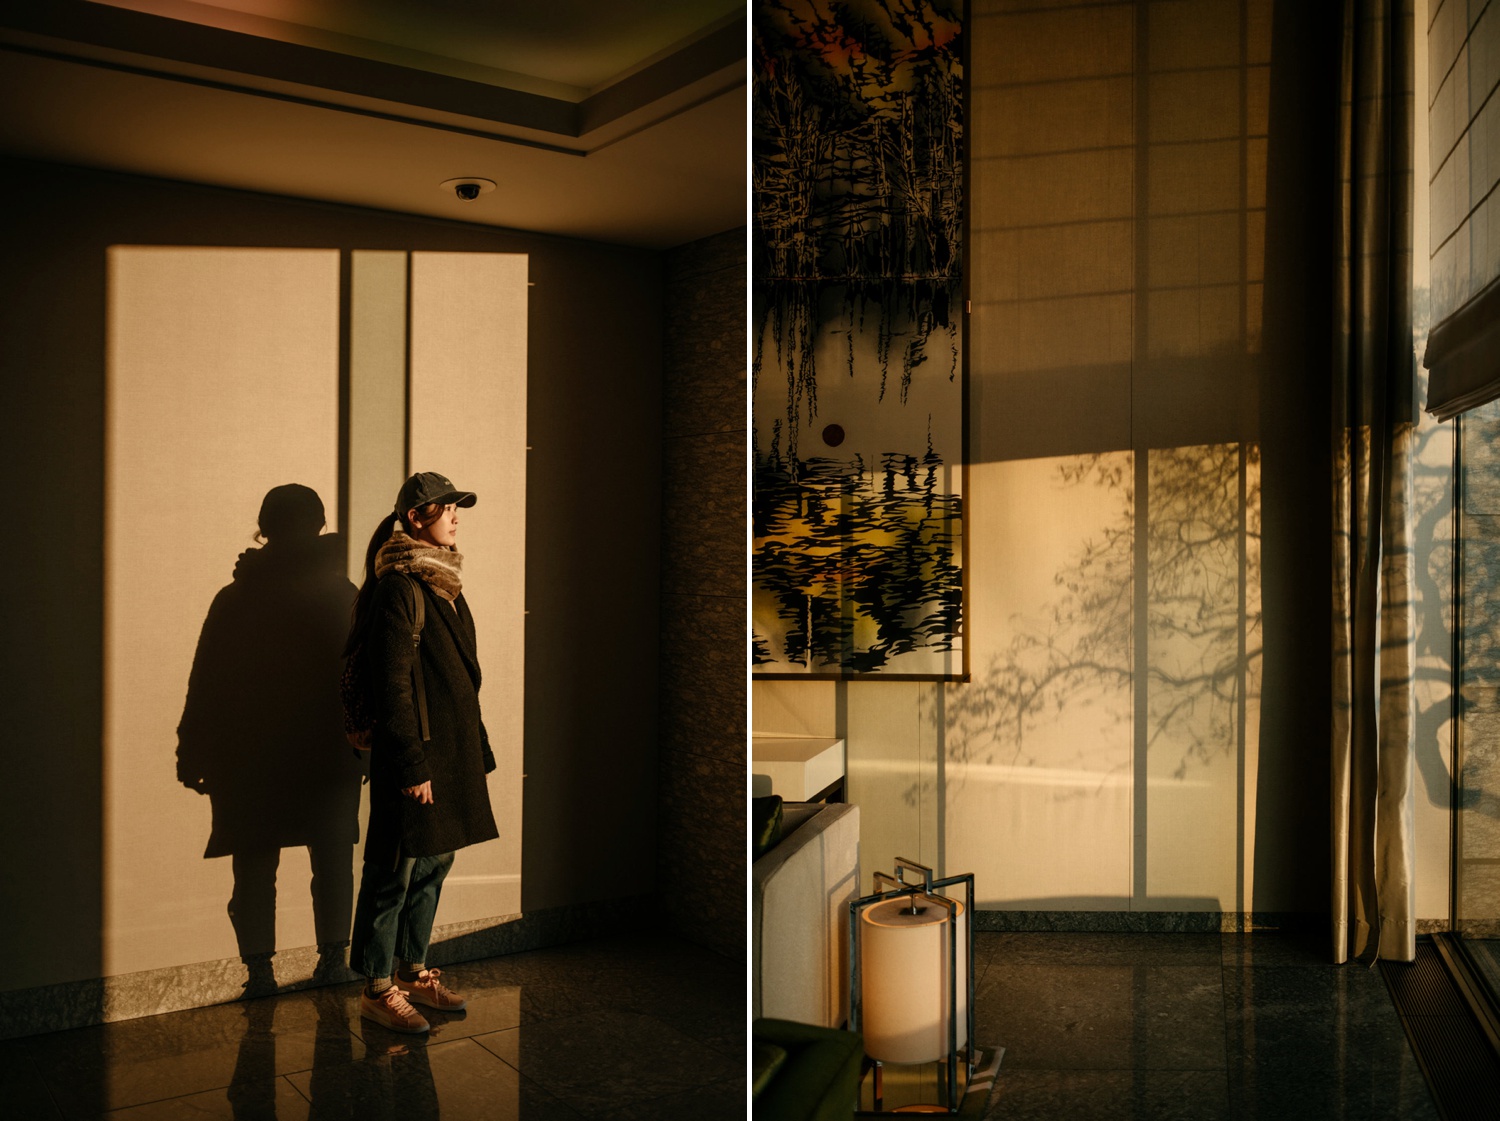 Palace Hotel Tokyo by Yann Audic